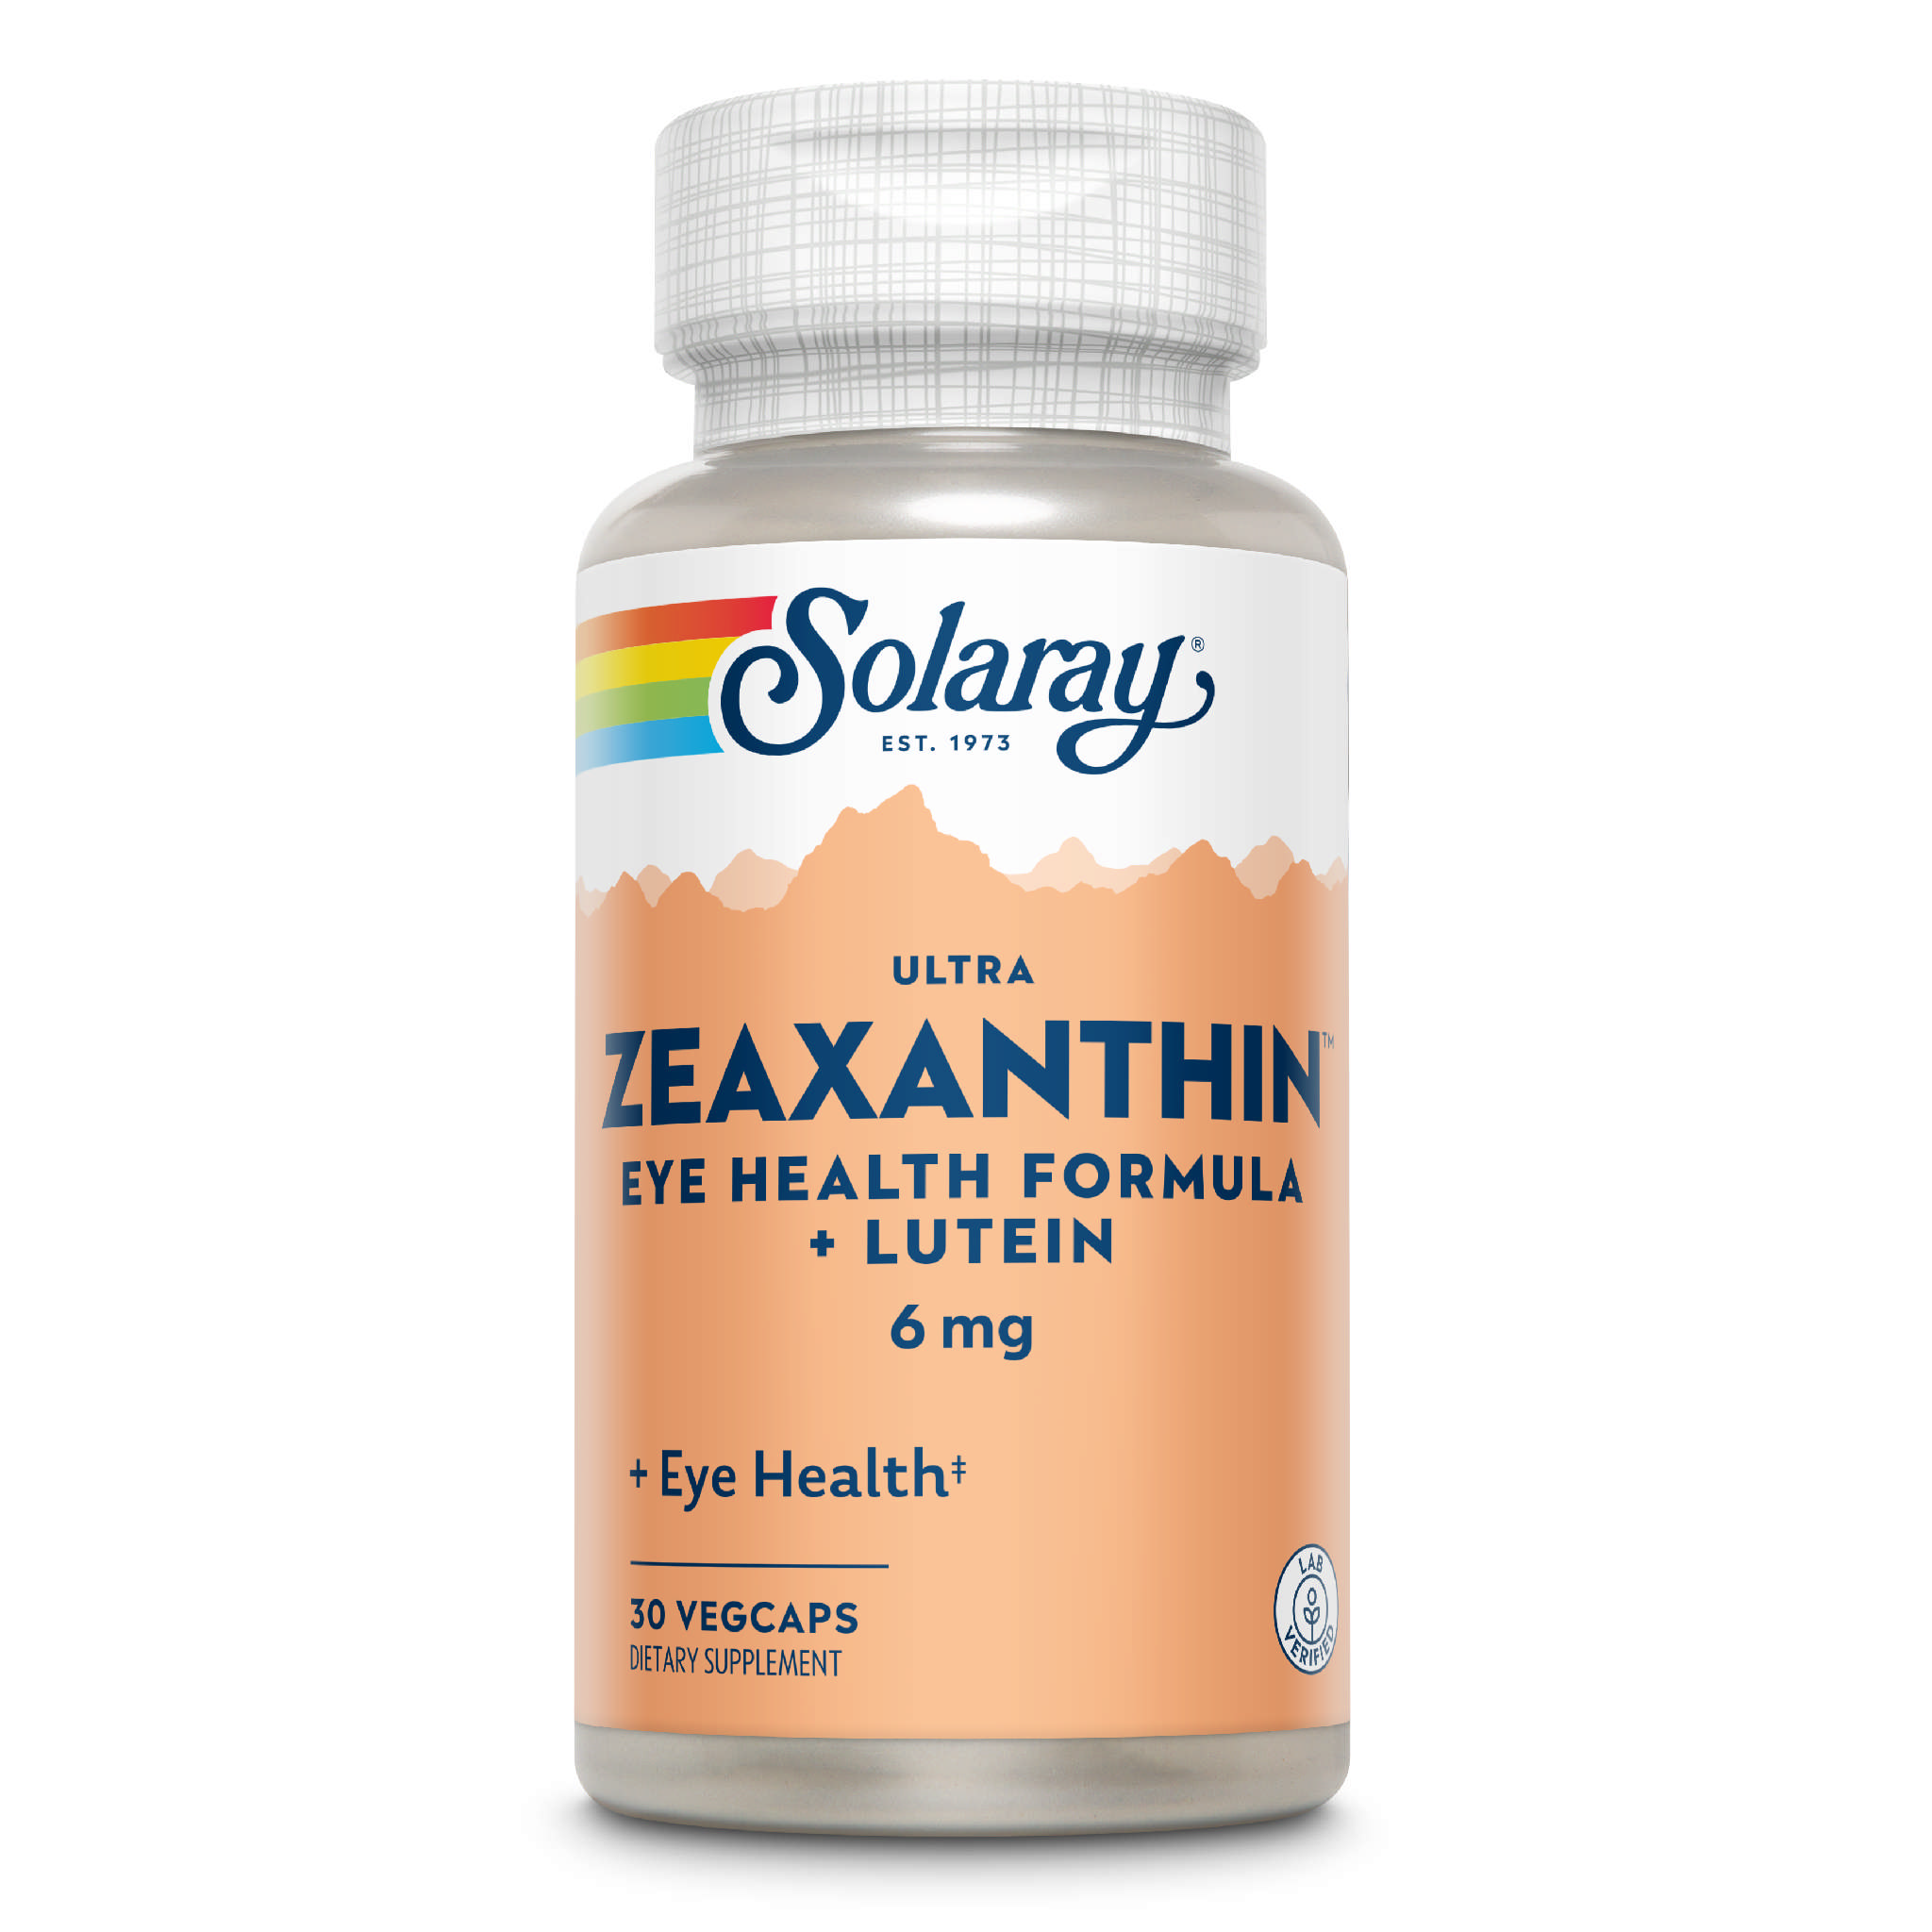 Solaray - Zeaxanthin Ultra 6 mg